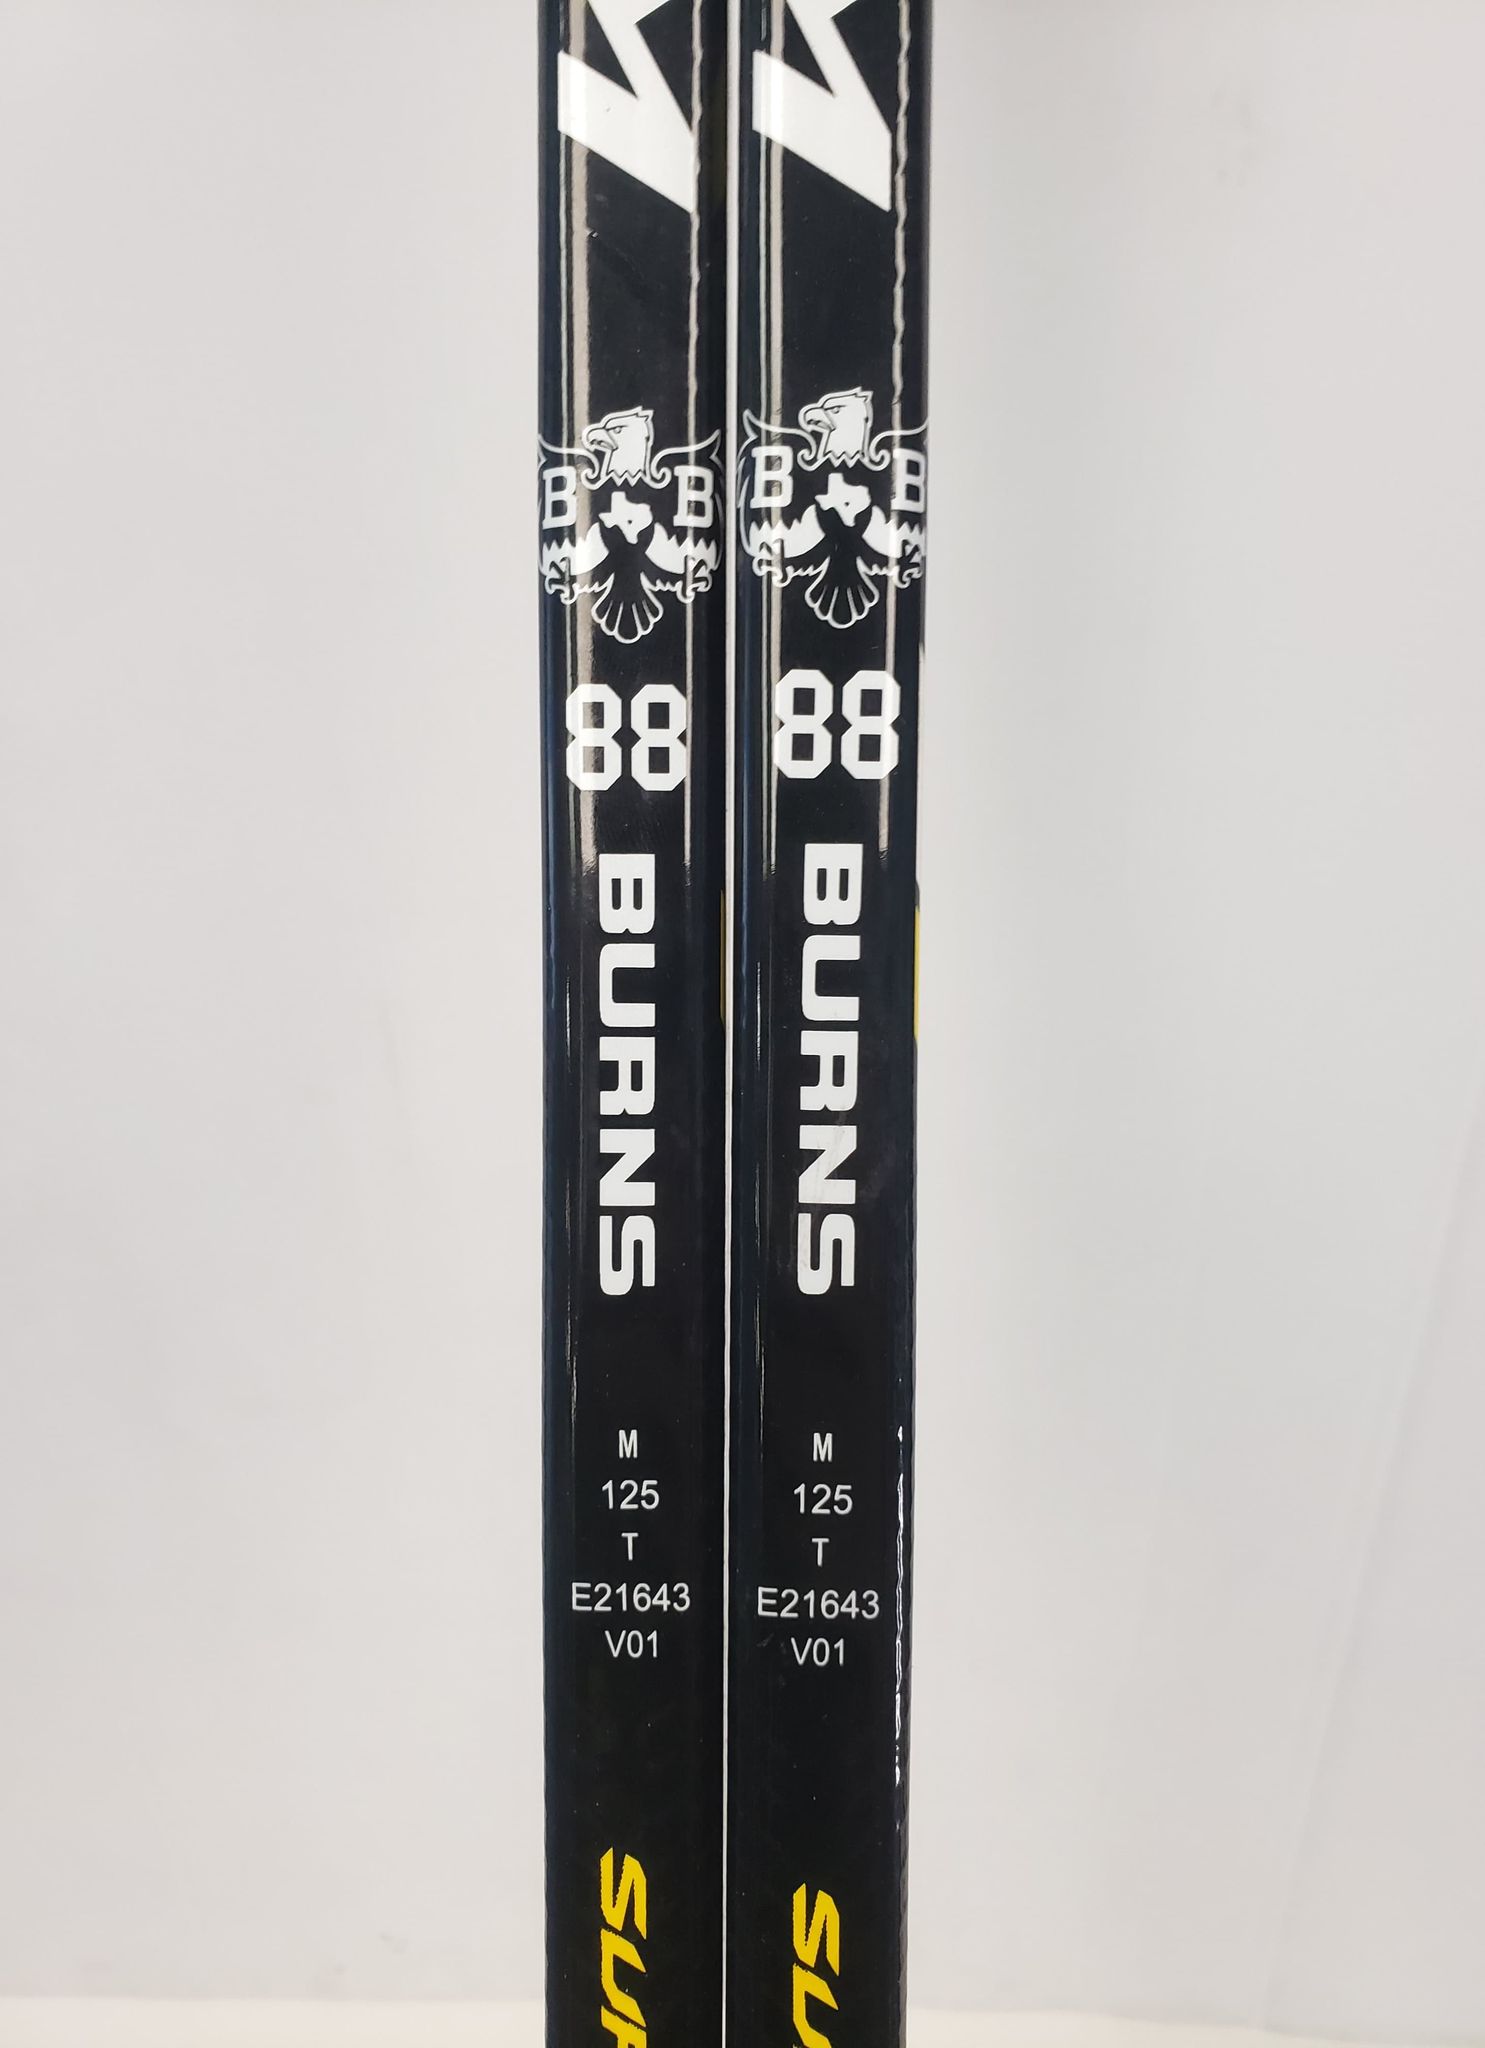 Brent Burns surprises kids with brand new CCM hockey sticks